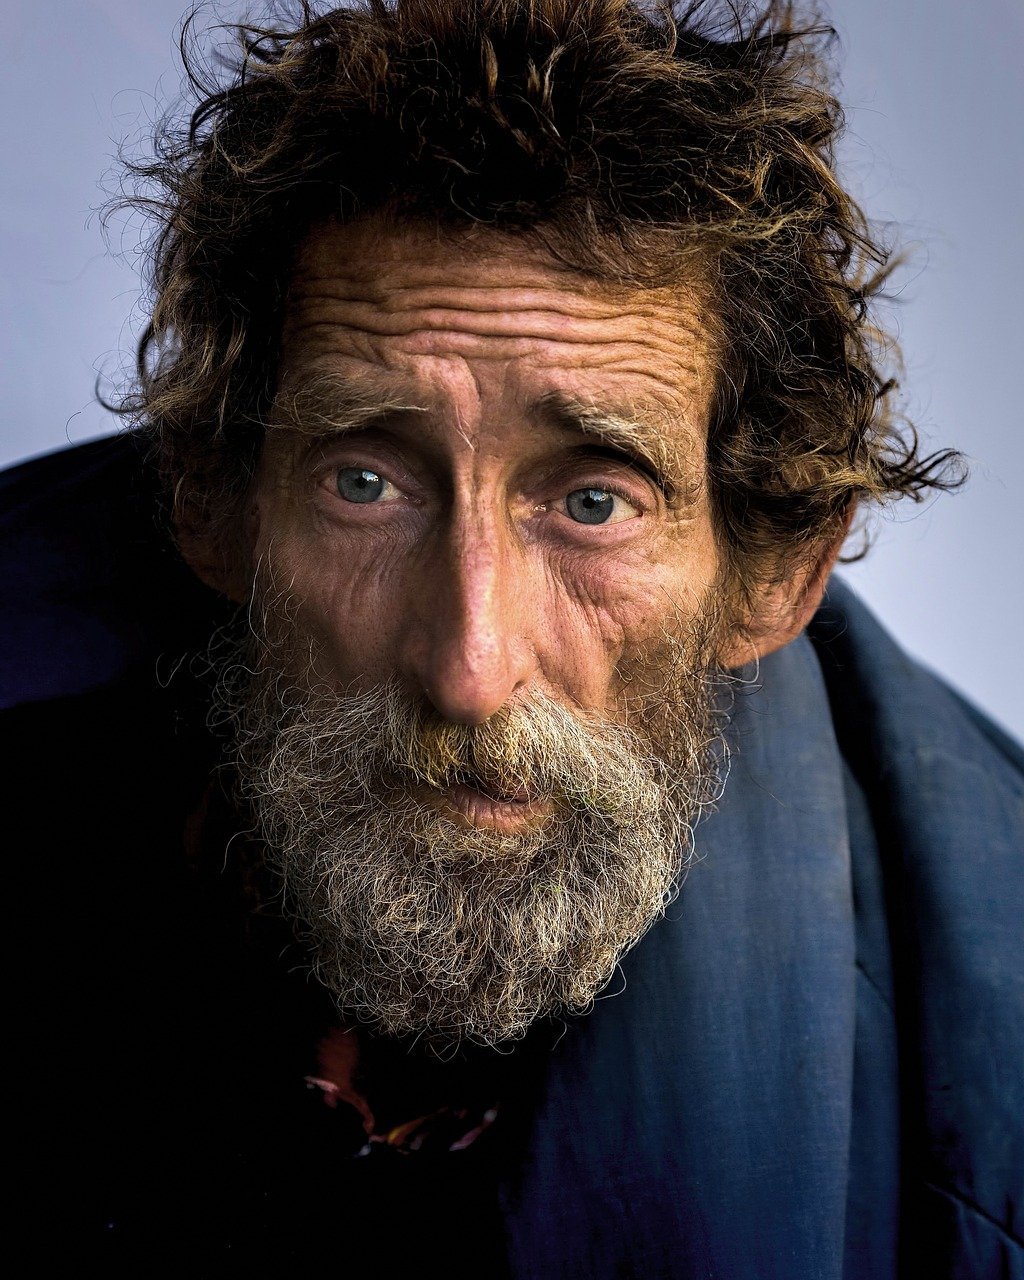 A rugged-looking man starring at the camera | Photo: Pixabay/Leroy Skalstad